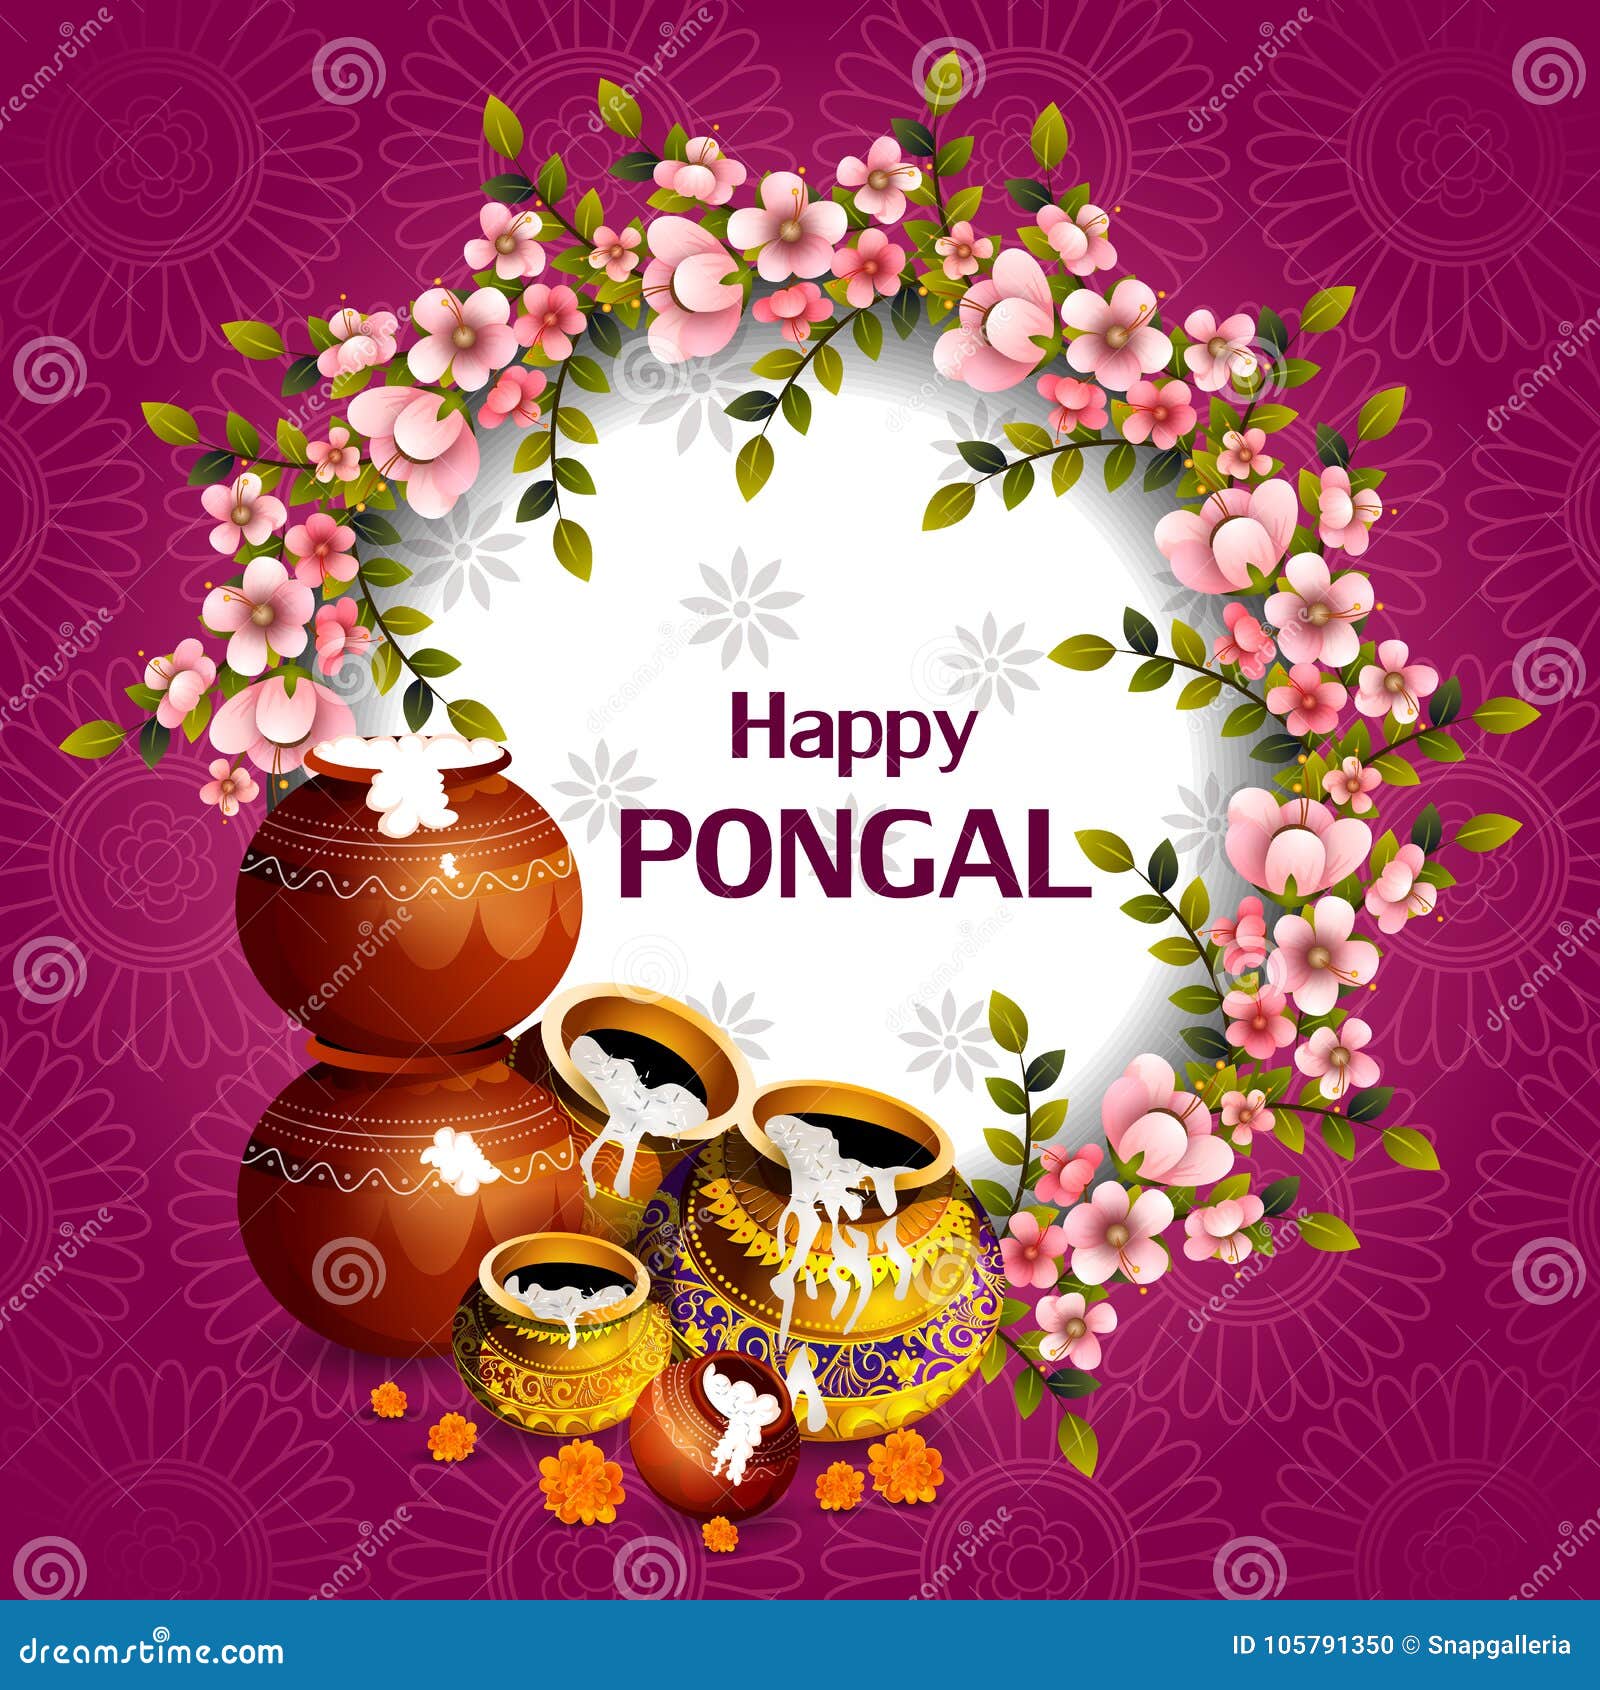 Happy Pongal Festival Of Tamil Nadu India Background Illustration ...